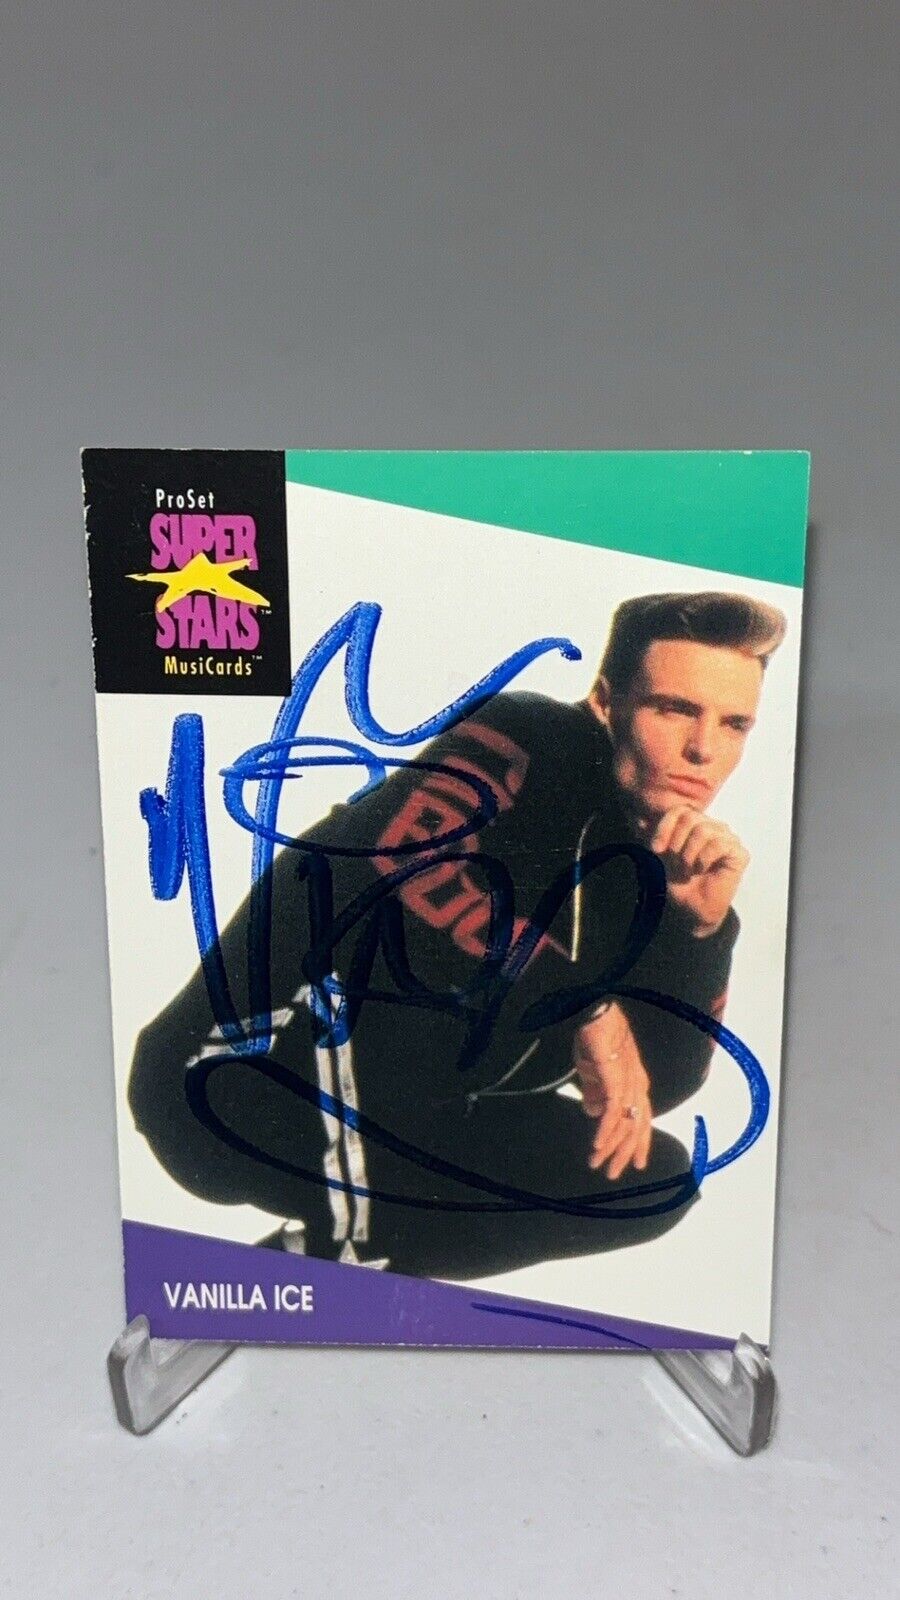 1991 ProSet Super Stars MusiCards Vanilla Ice Auto Signed Card #143